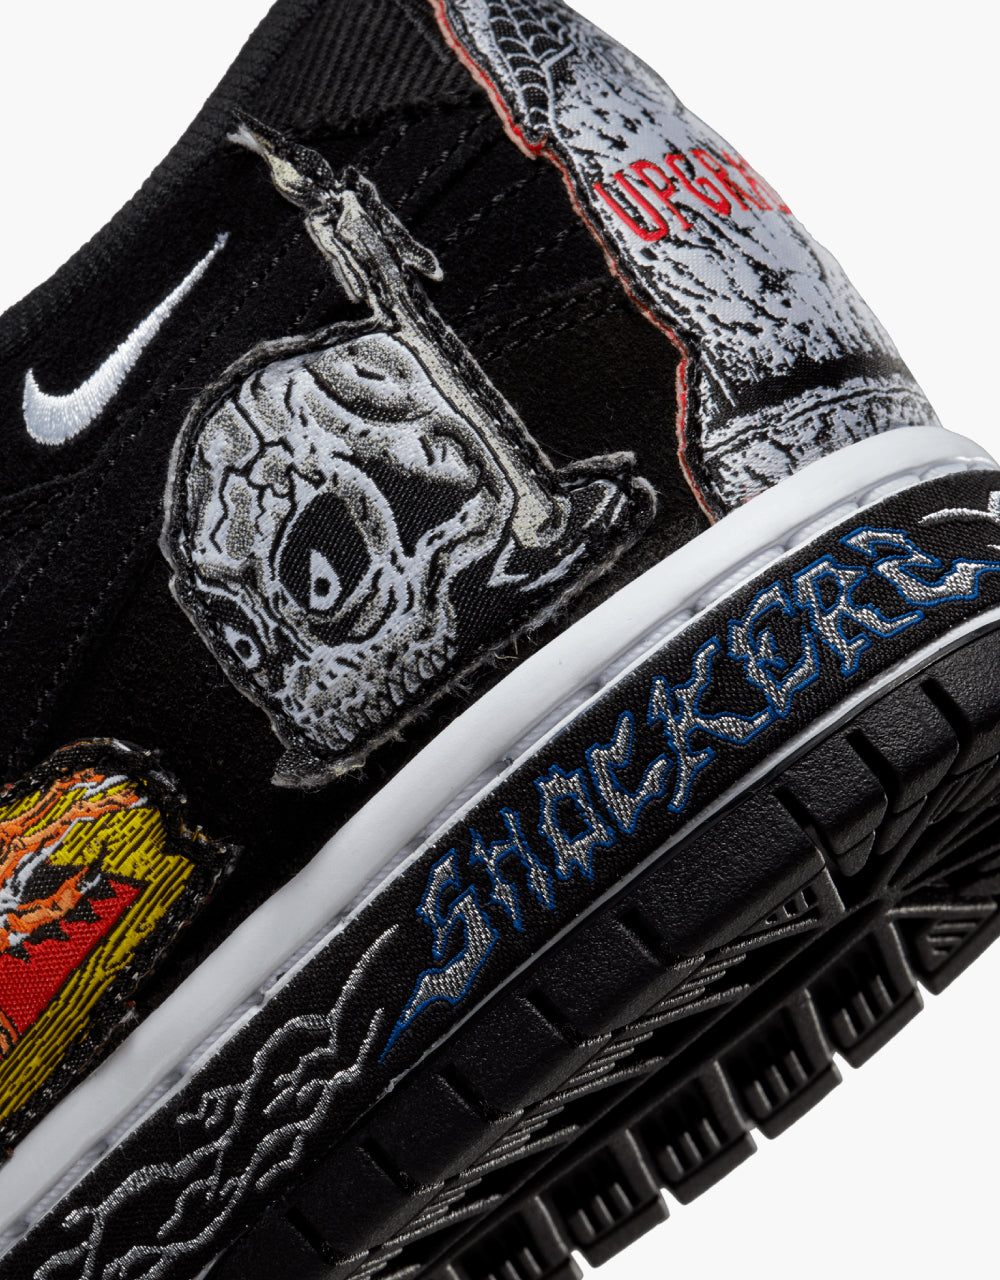 Nike SB 'Neck Face' Dunk Low Pro QS Skate Shoe